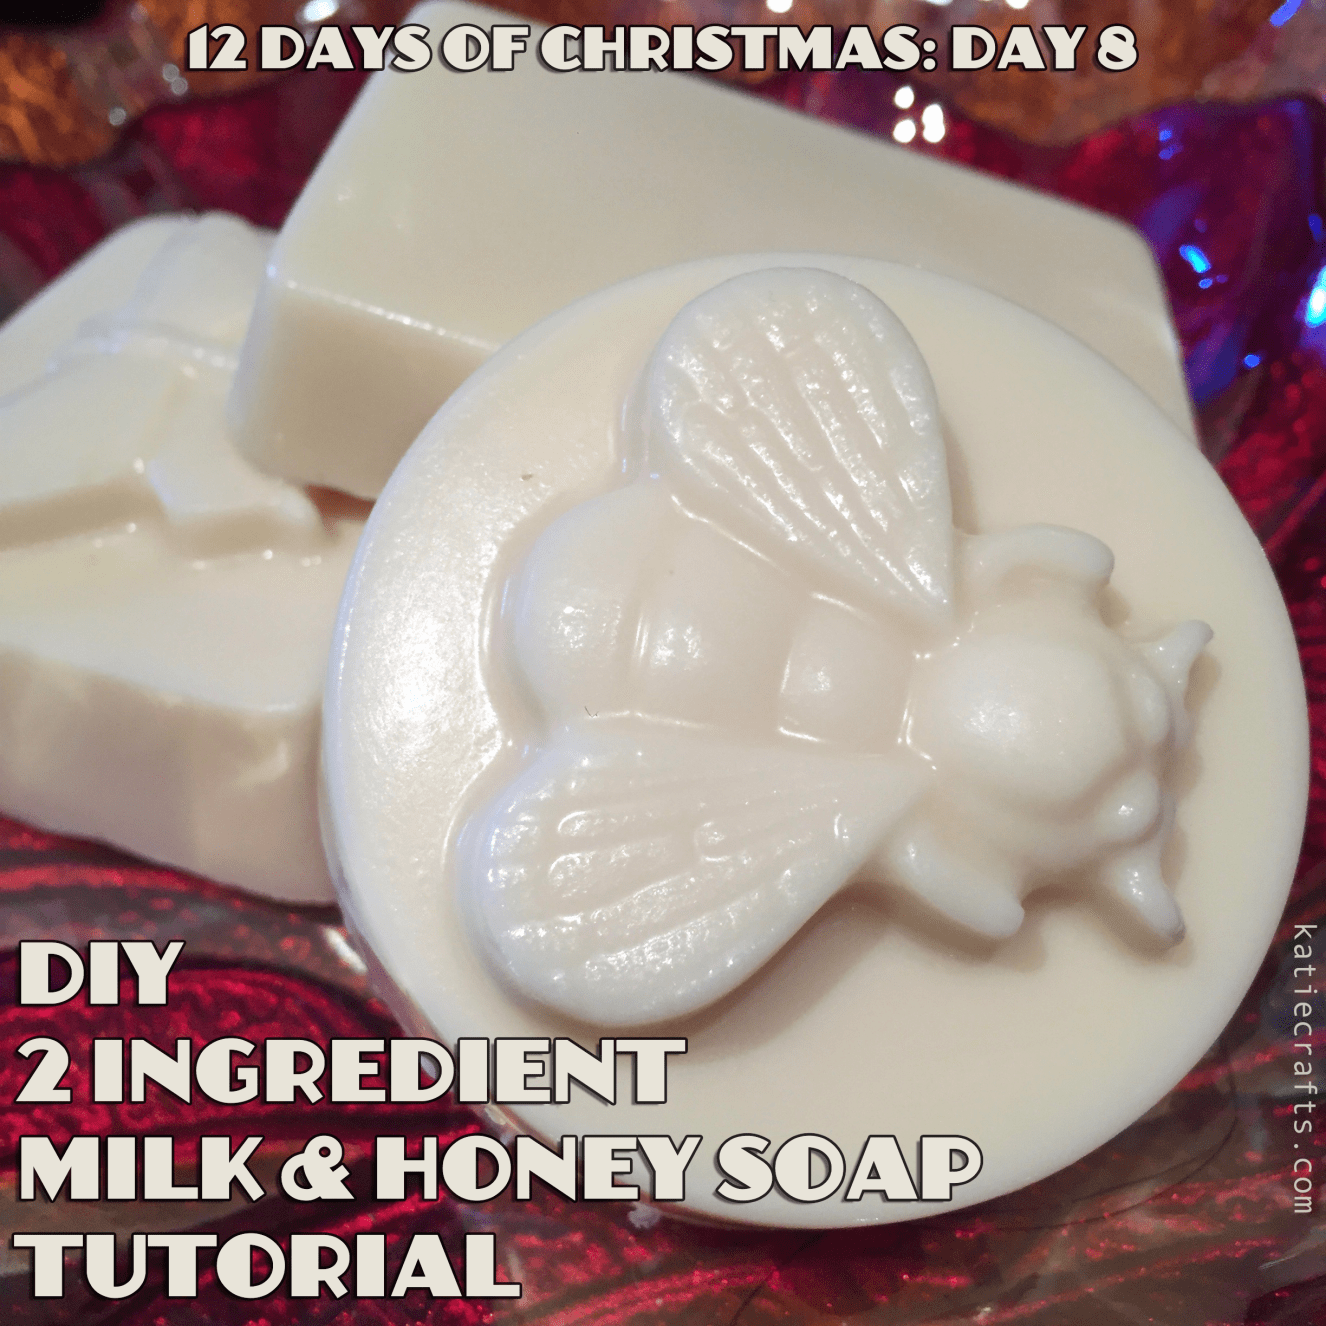 DIY 2 Ingredient Milk & Honey Soap Tutorial by Katie Crafts; https://www.katiecrafts.com